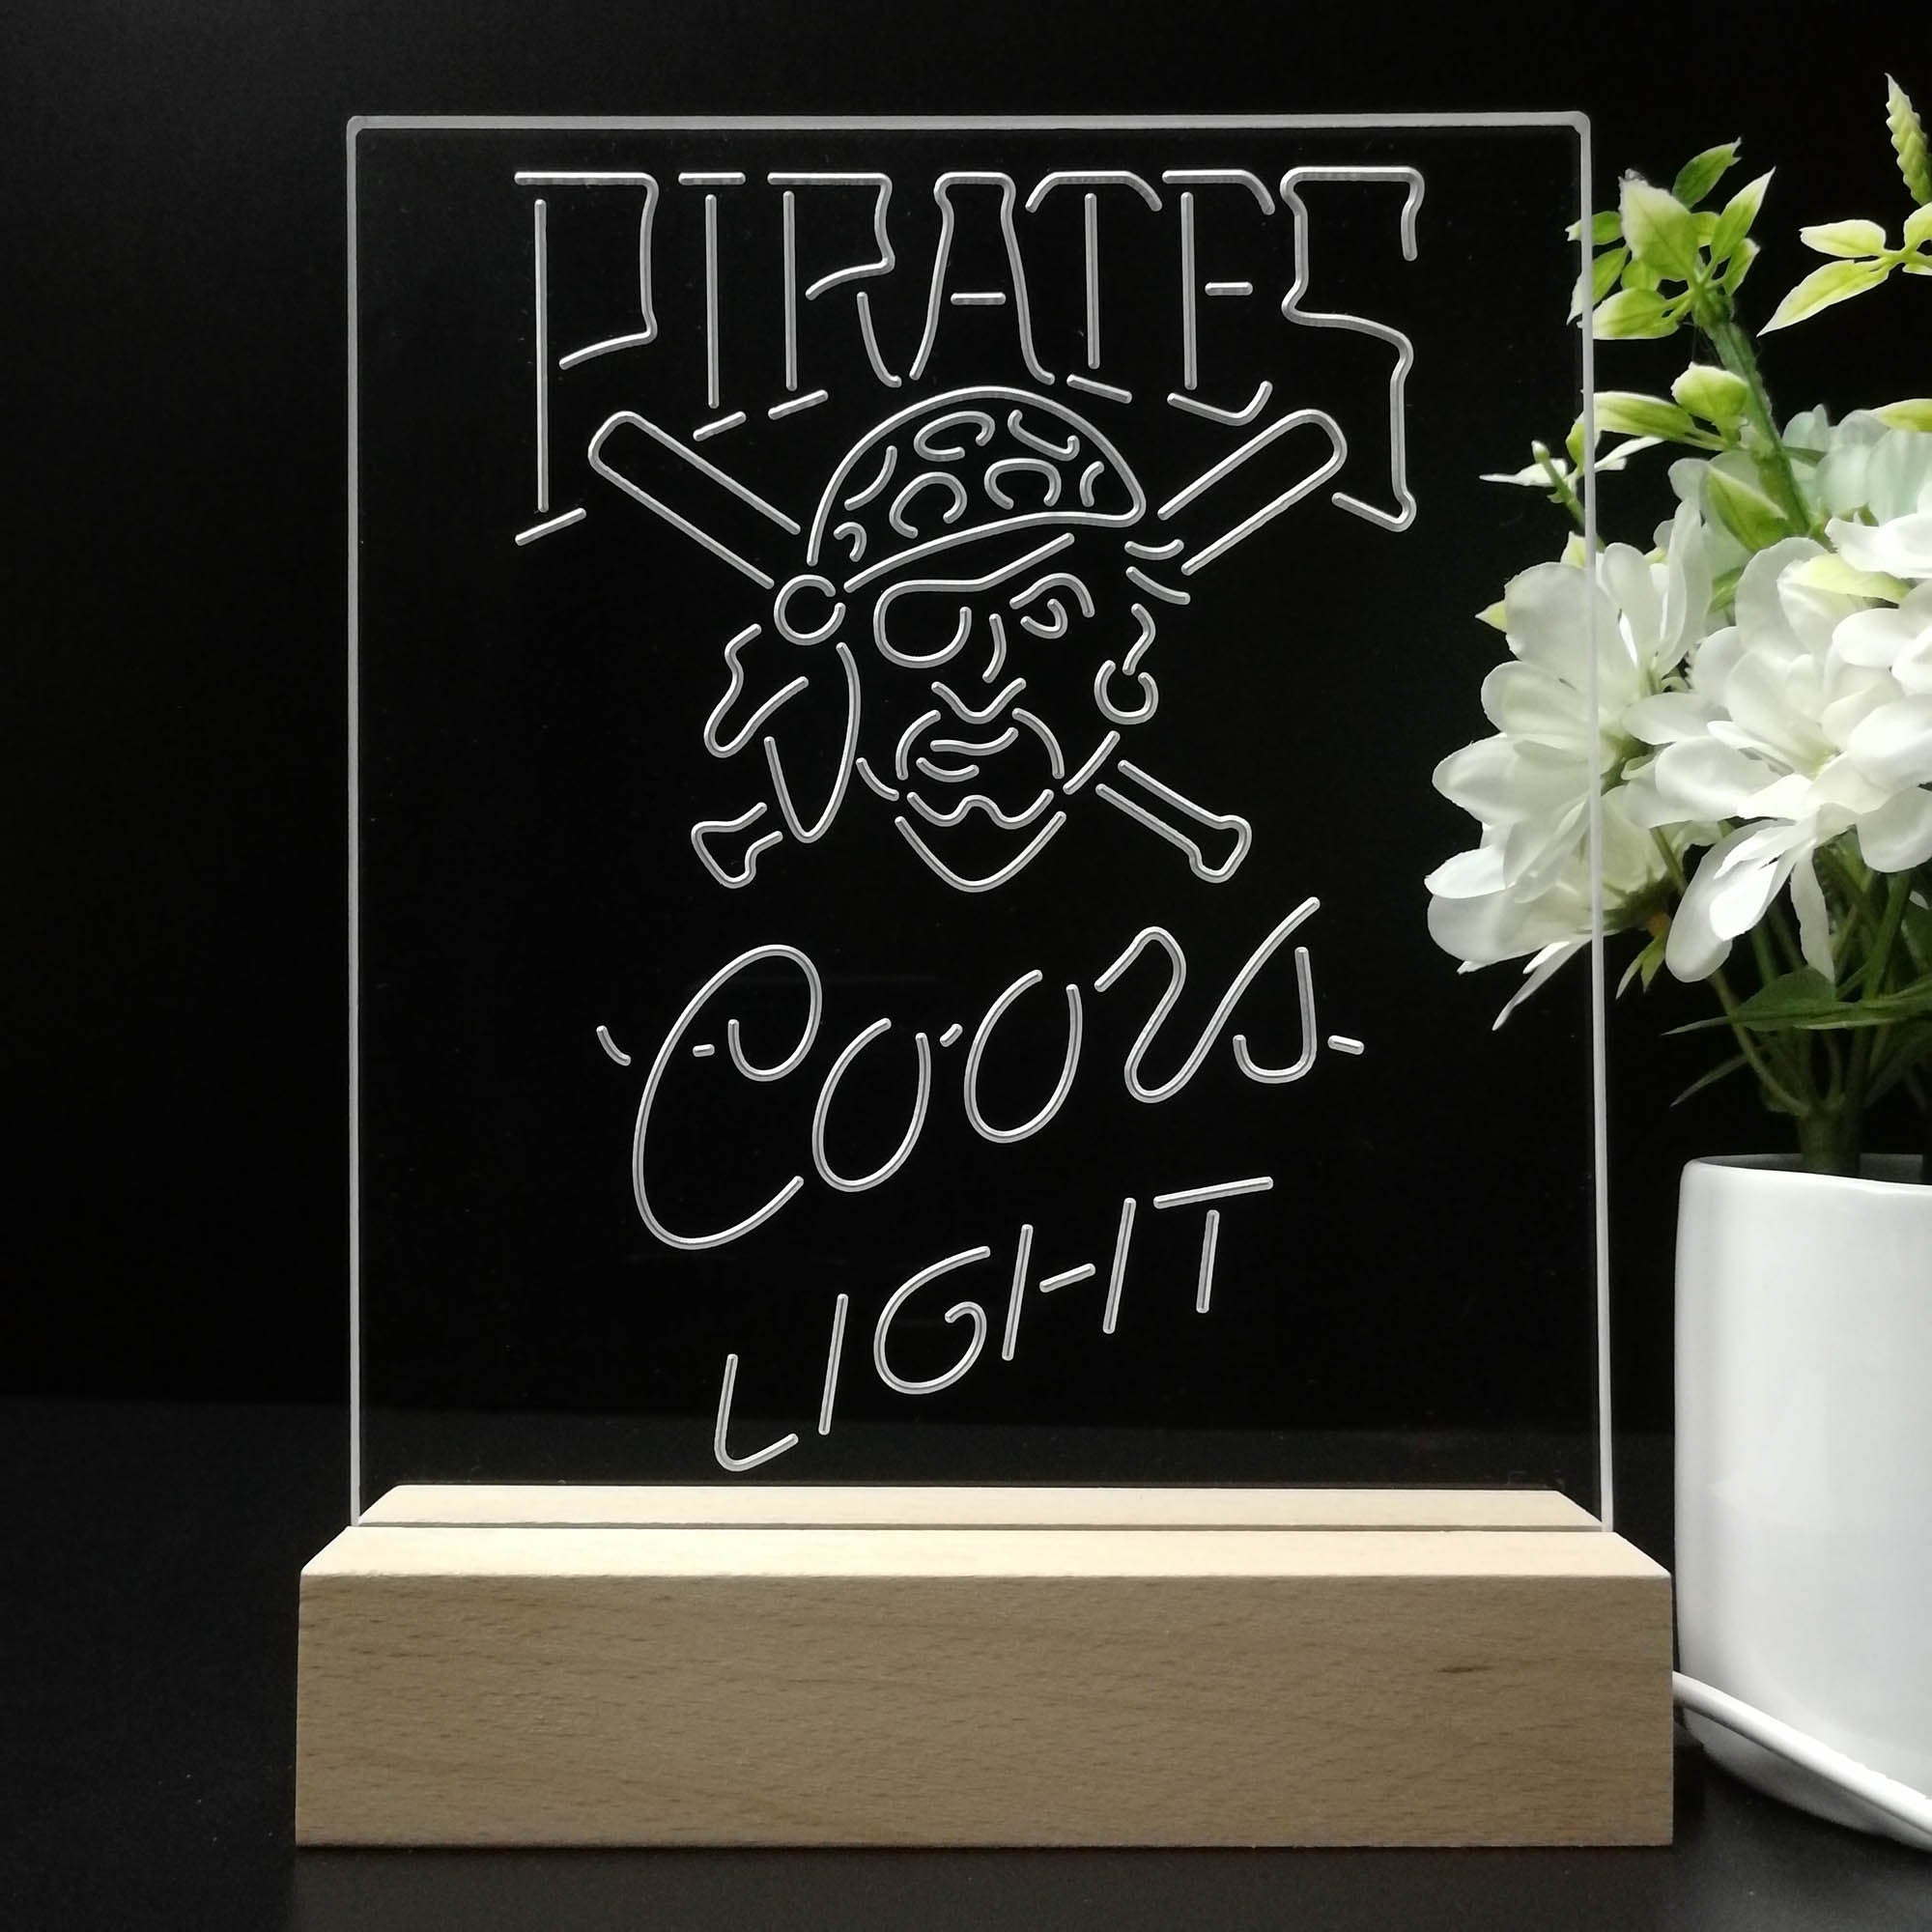 Pittsburgh Pirates Coors Light Neon Sign Pub Bar Lamp